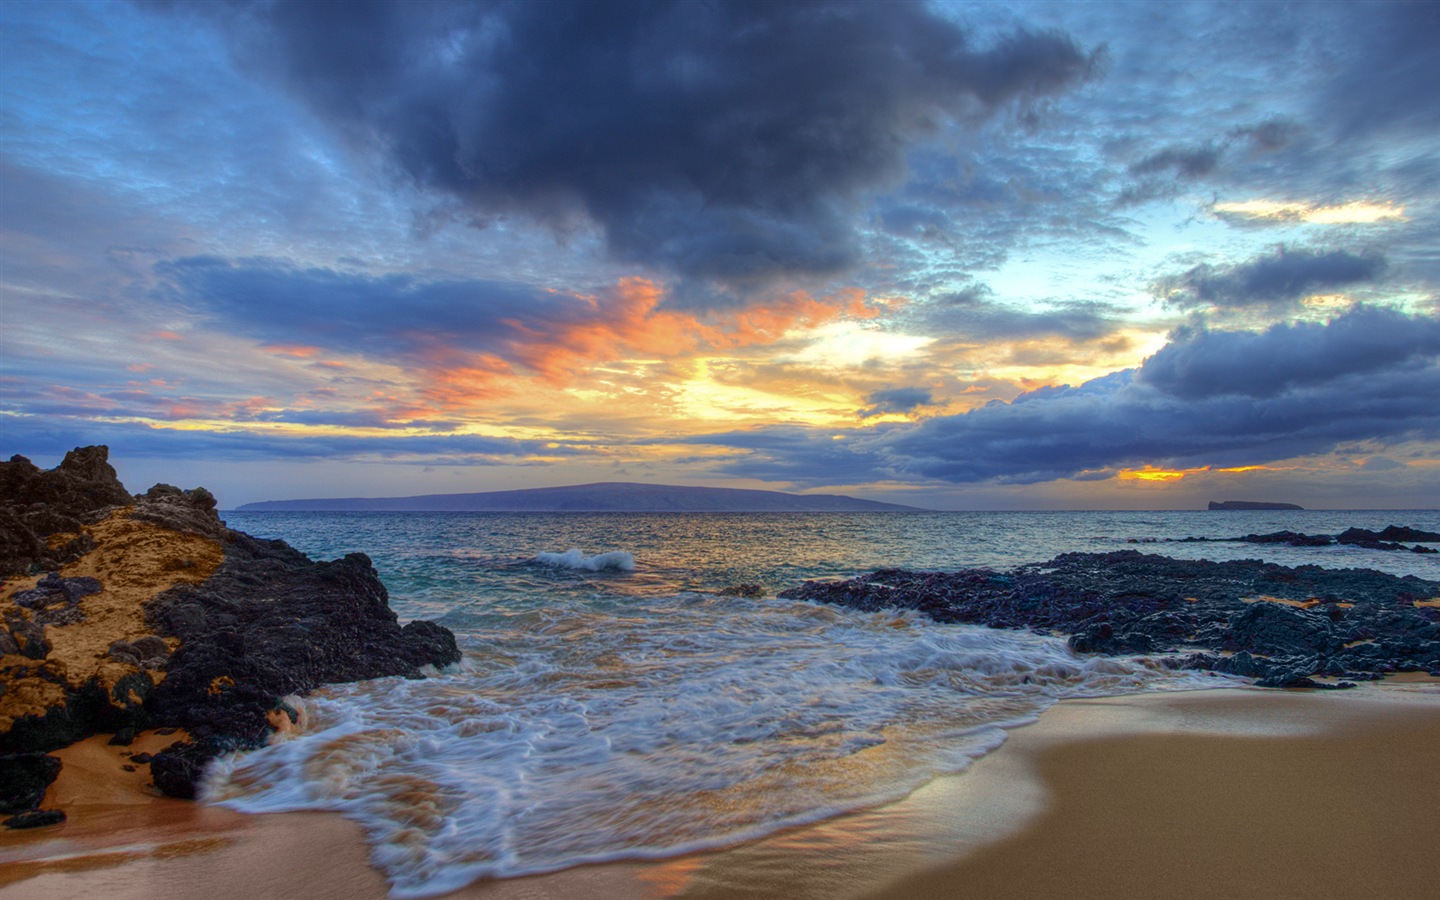 Windows 8 theme wallpaper: Beach sunrise and sunset views #9 - 1440x900